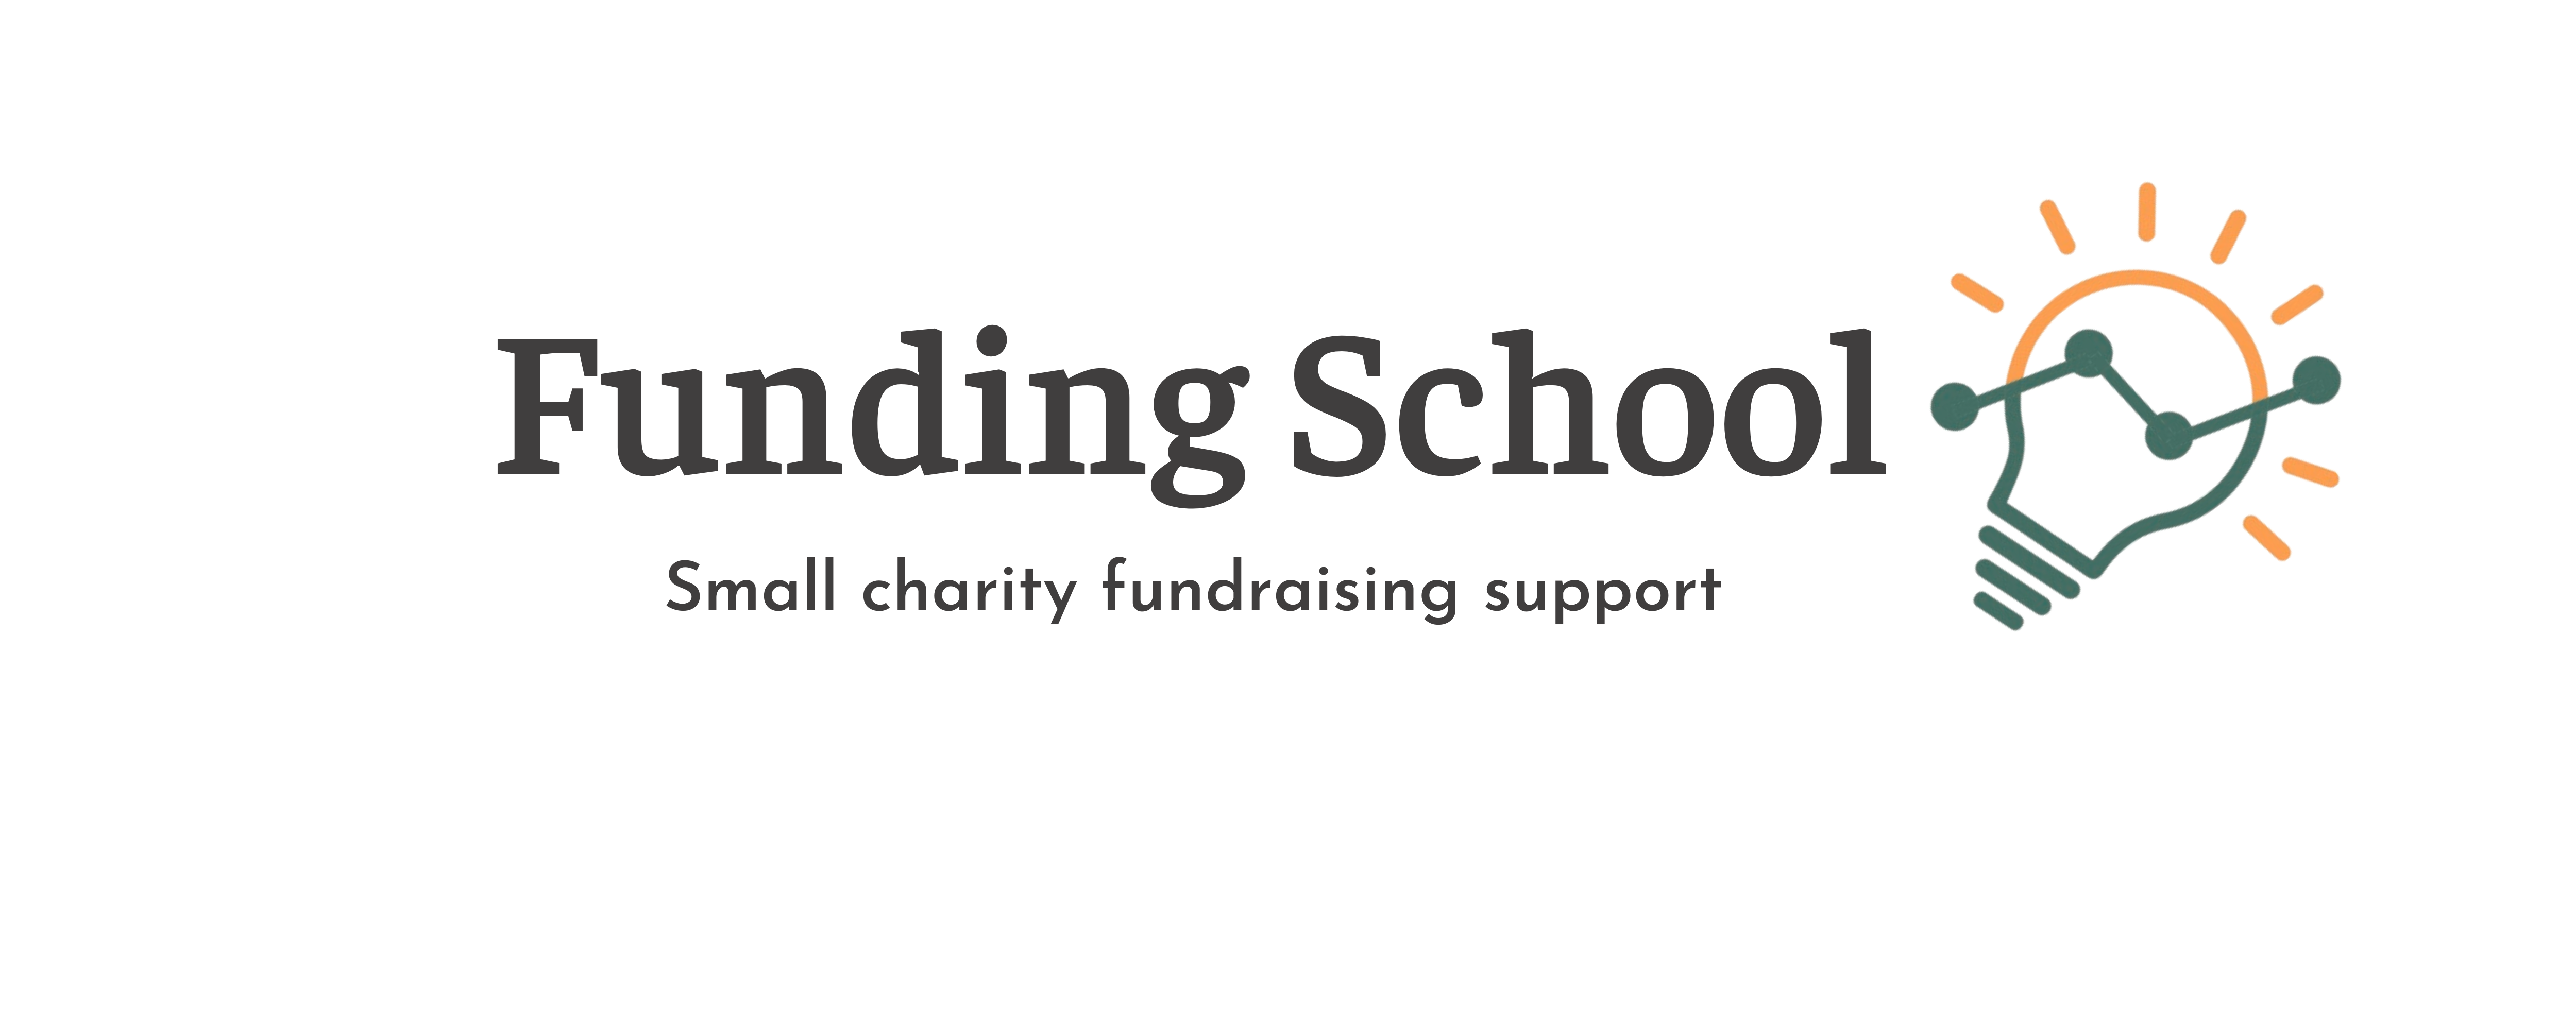 Funding School Logo 